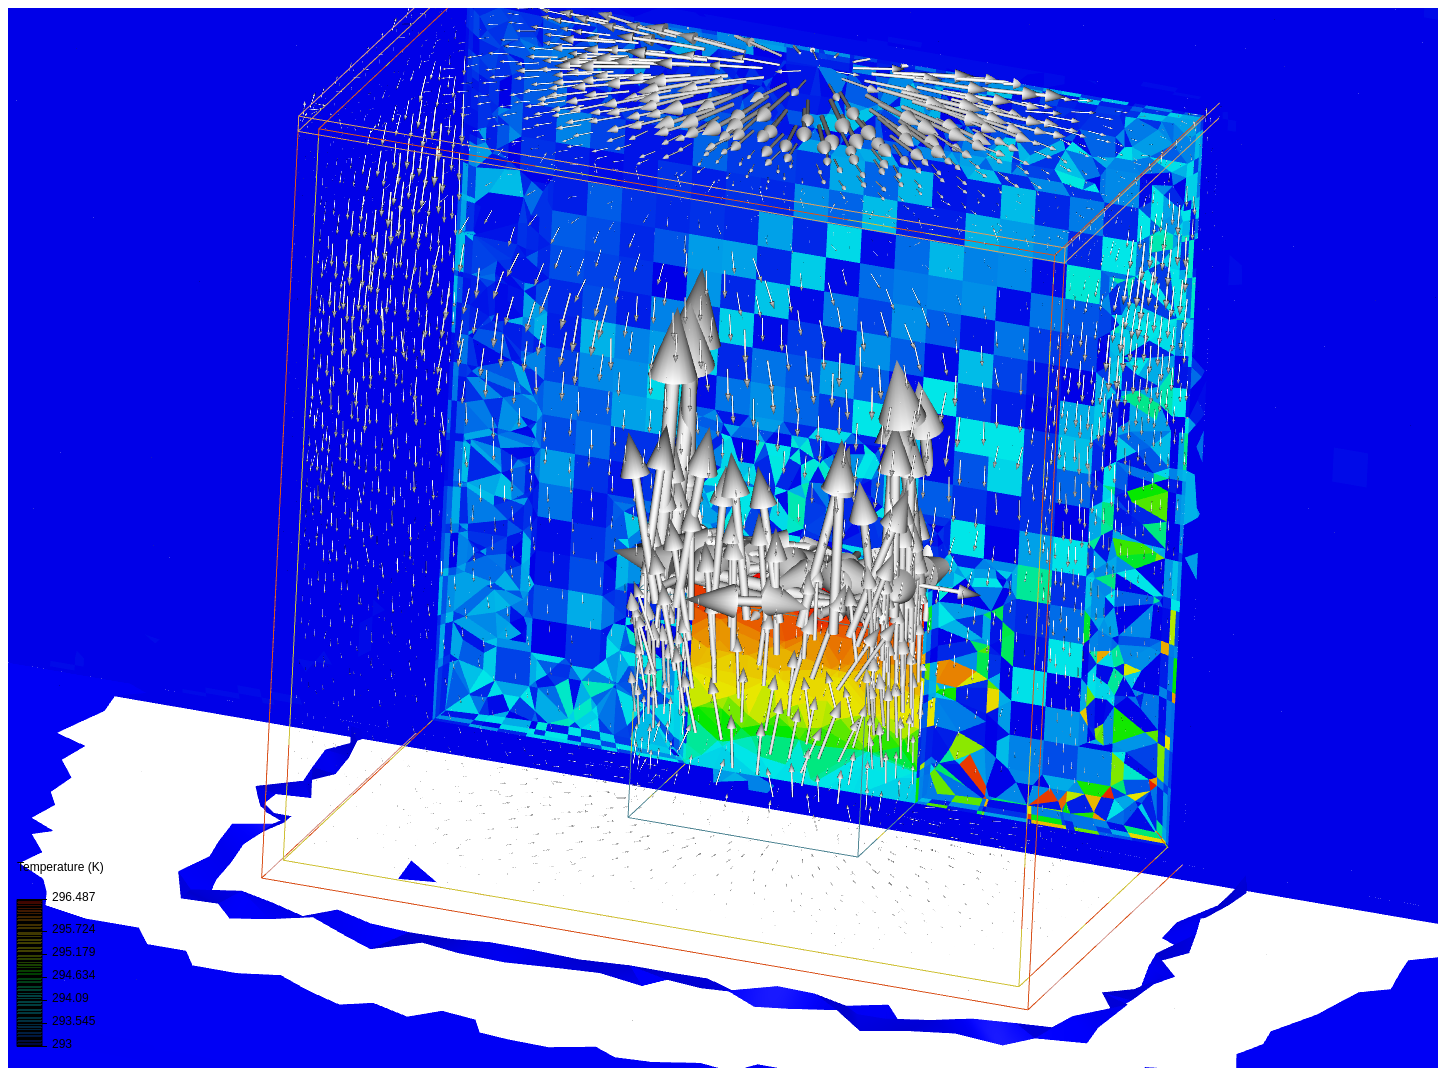 Heat Source in Box image